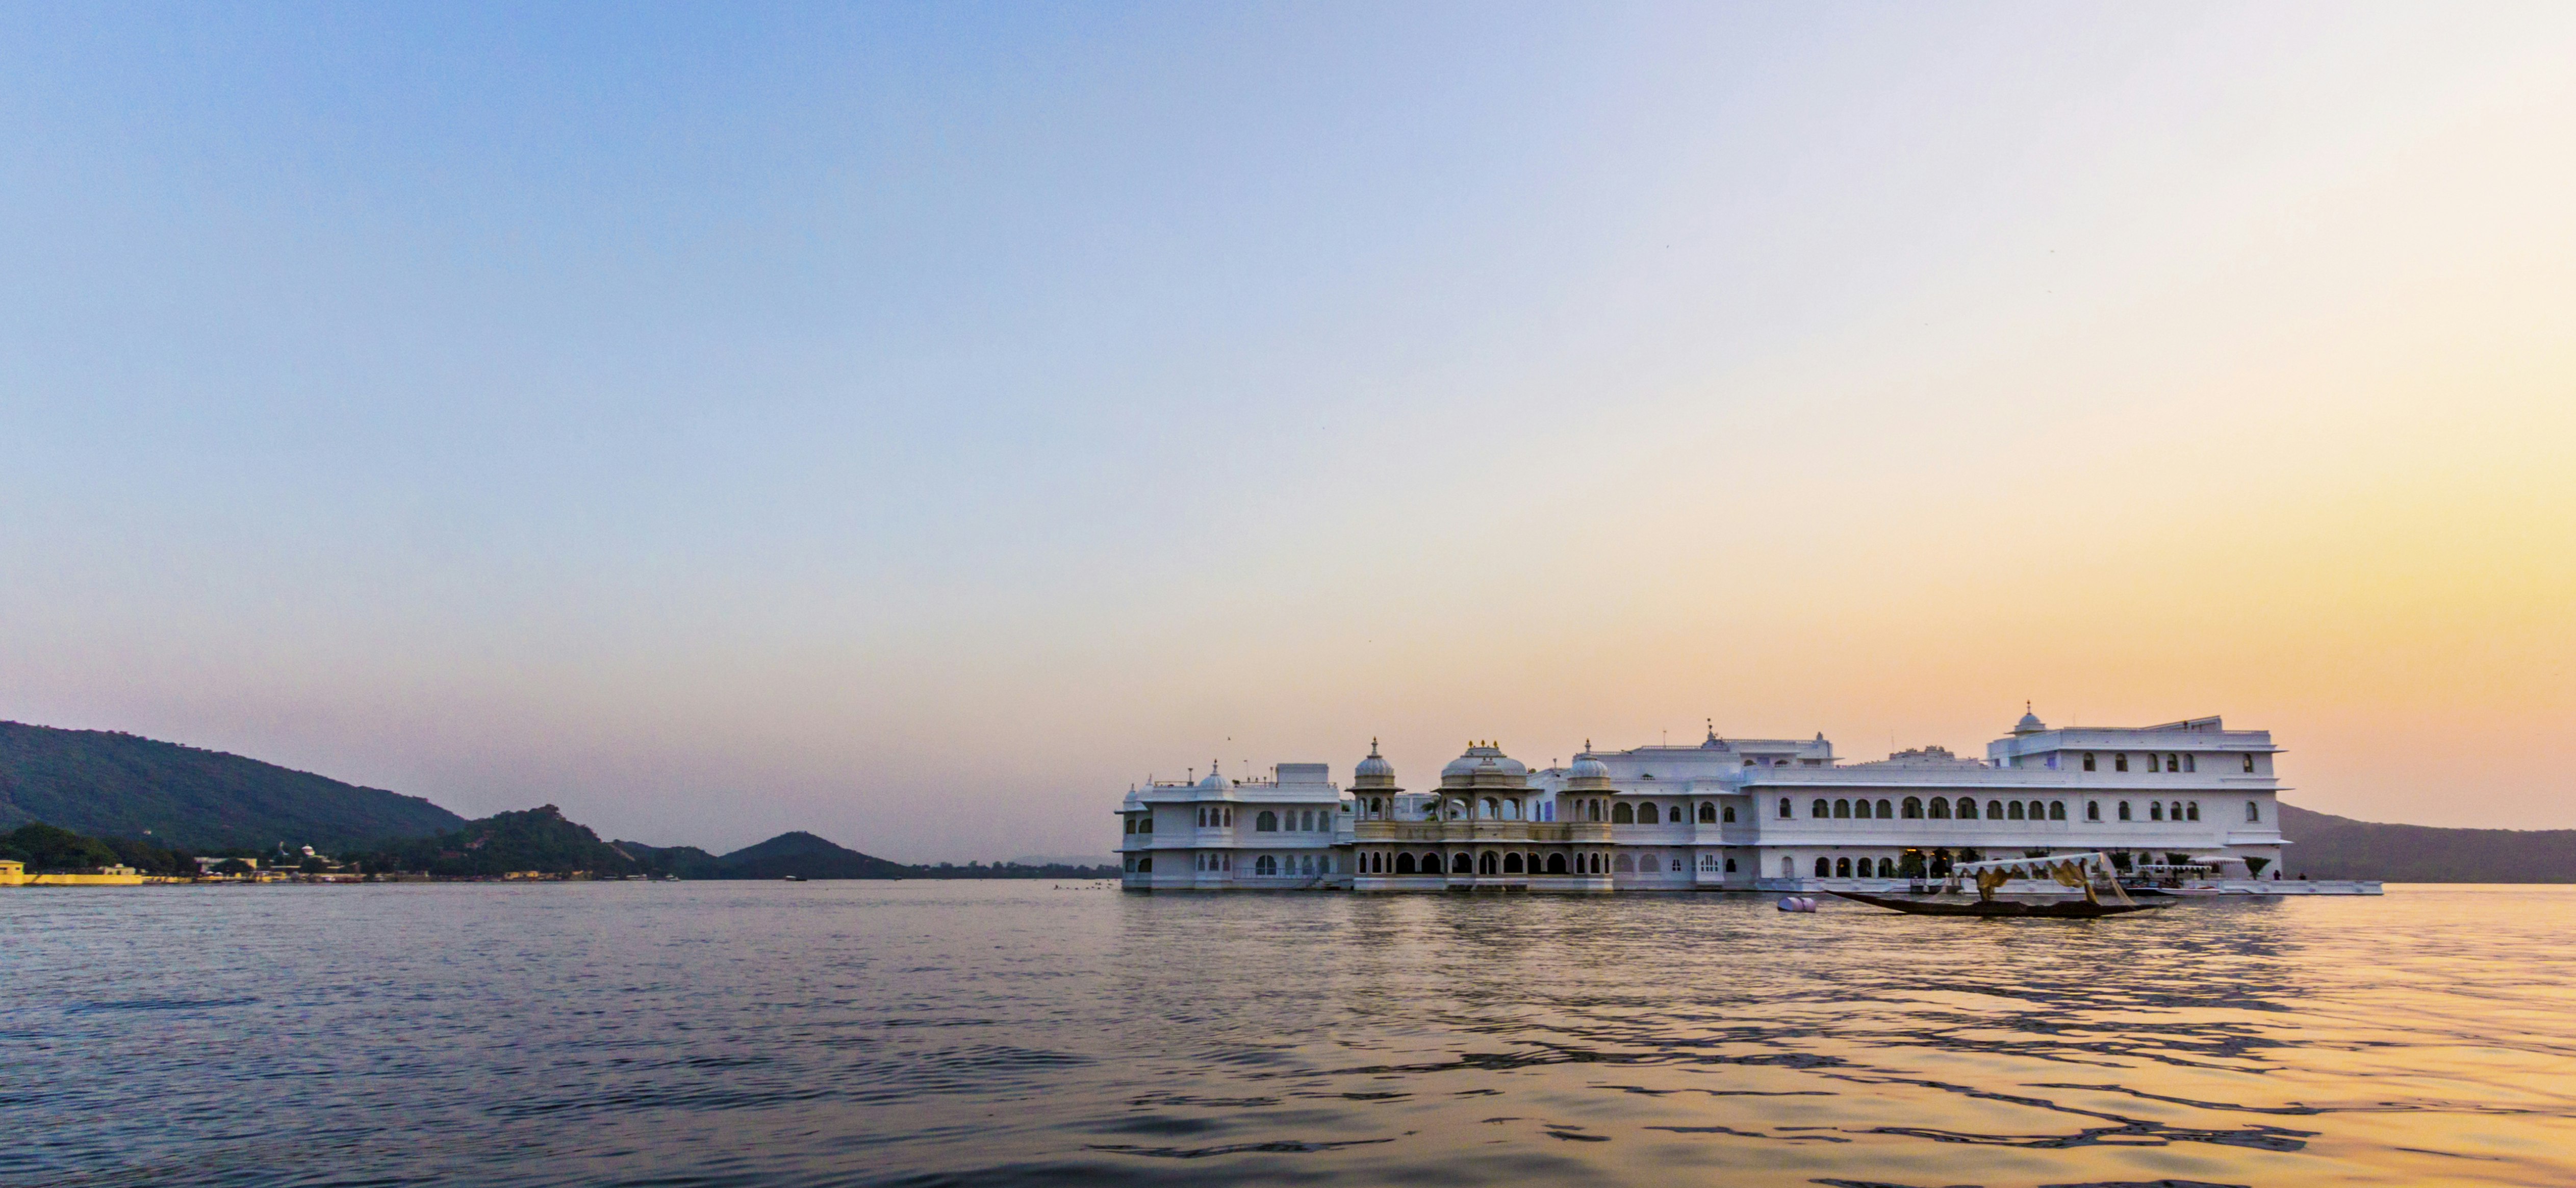 Lake Palace, Jagniwas island, Udaipur, Rajasthan, India